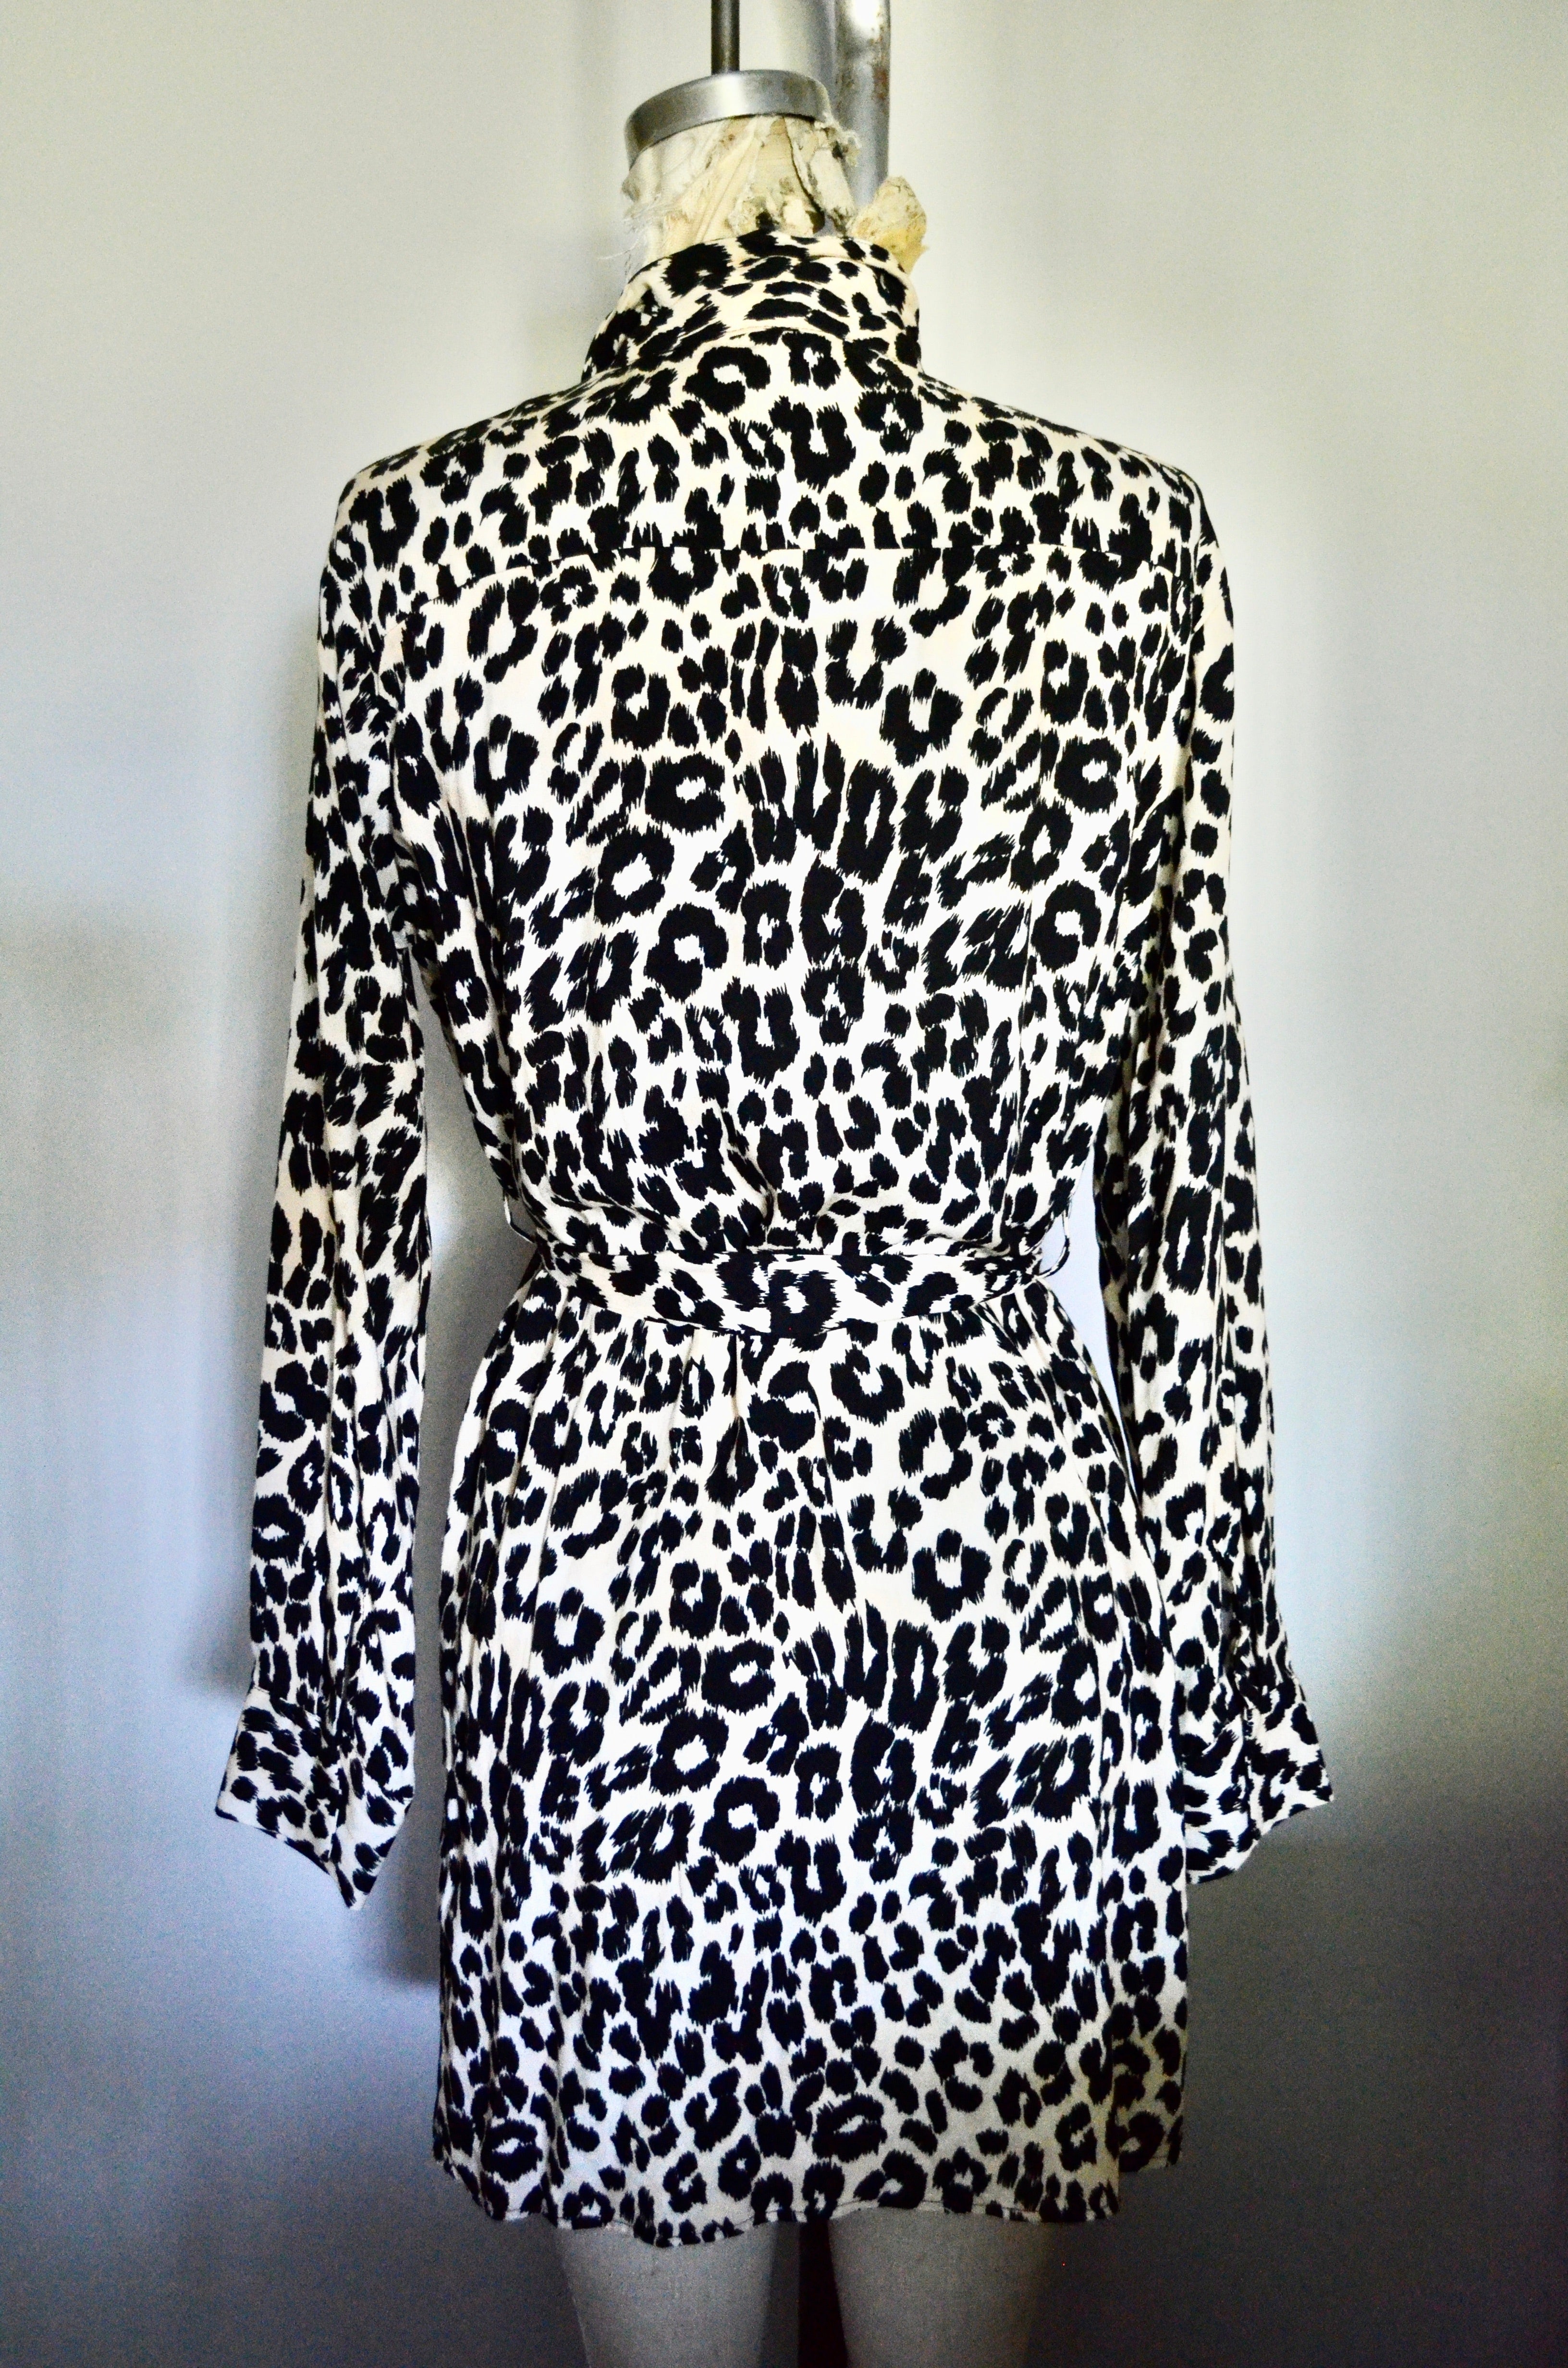 NWT TOPSHOP leopard print cheetah shirtdress pajama